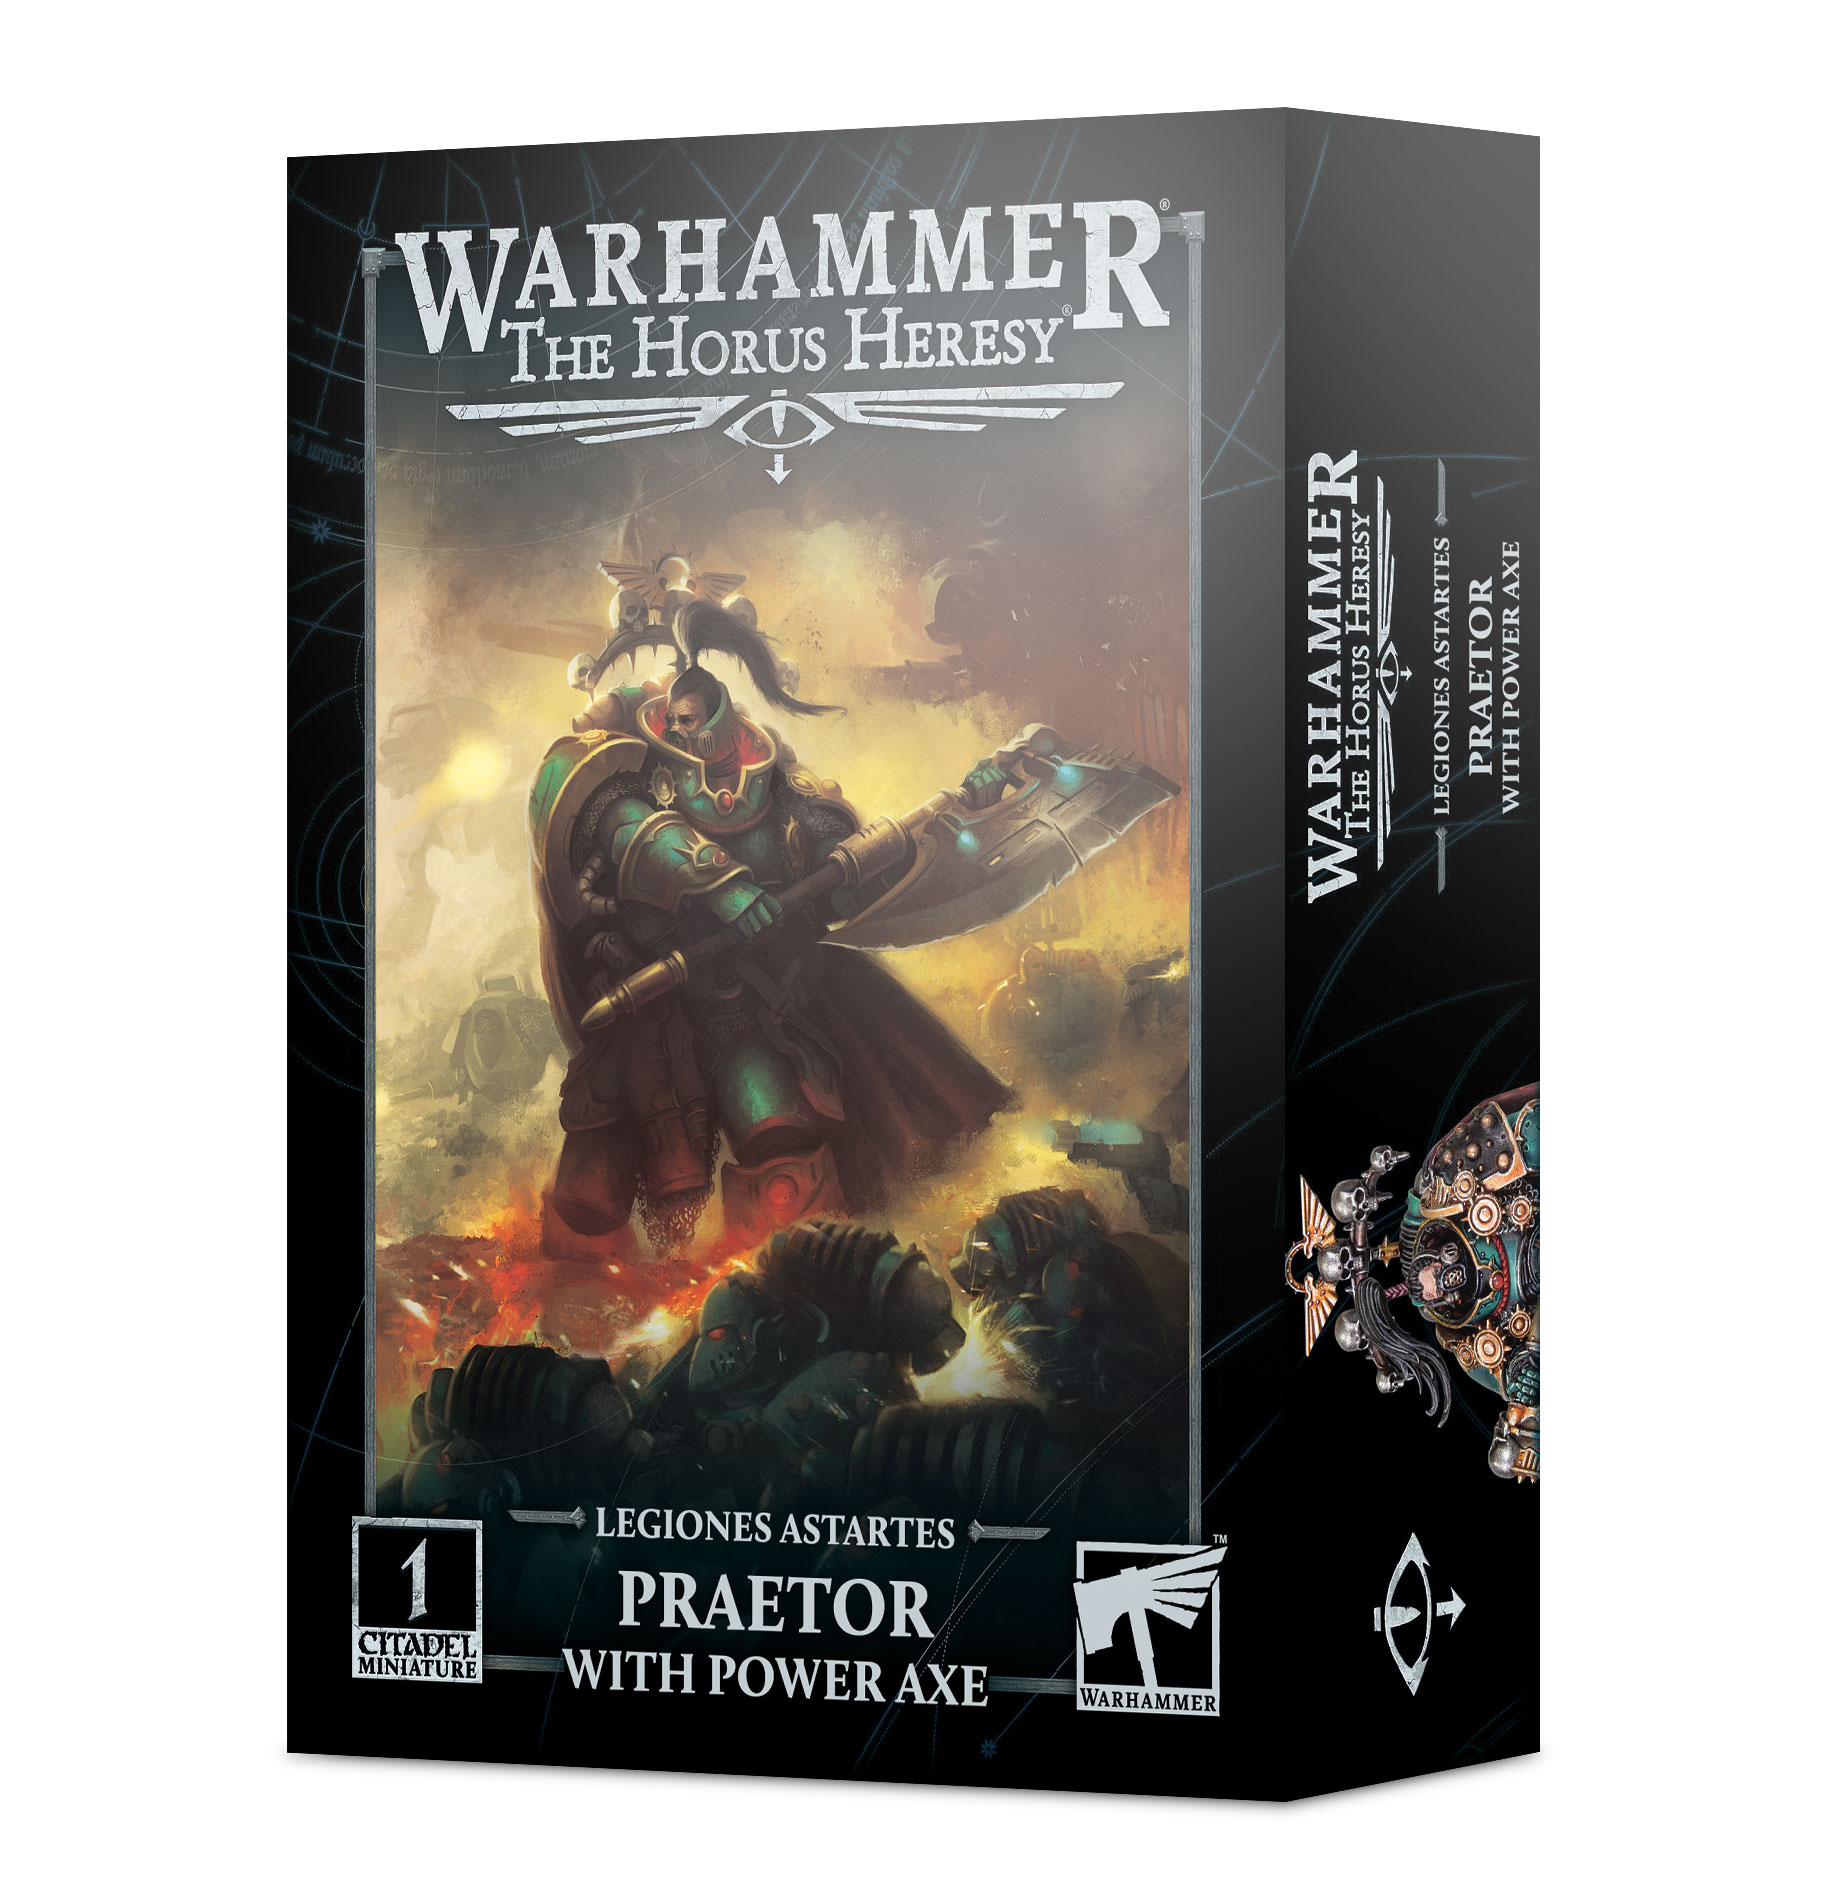 Praetor with Power Axe - Legiones Astartes - 31-11 - Warhammer The Horus Heresy